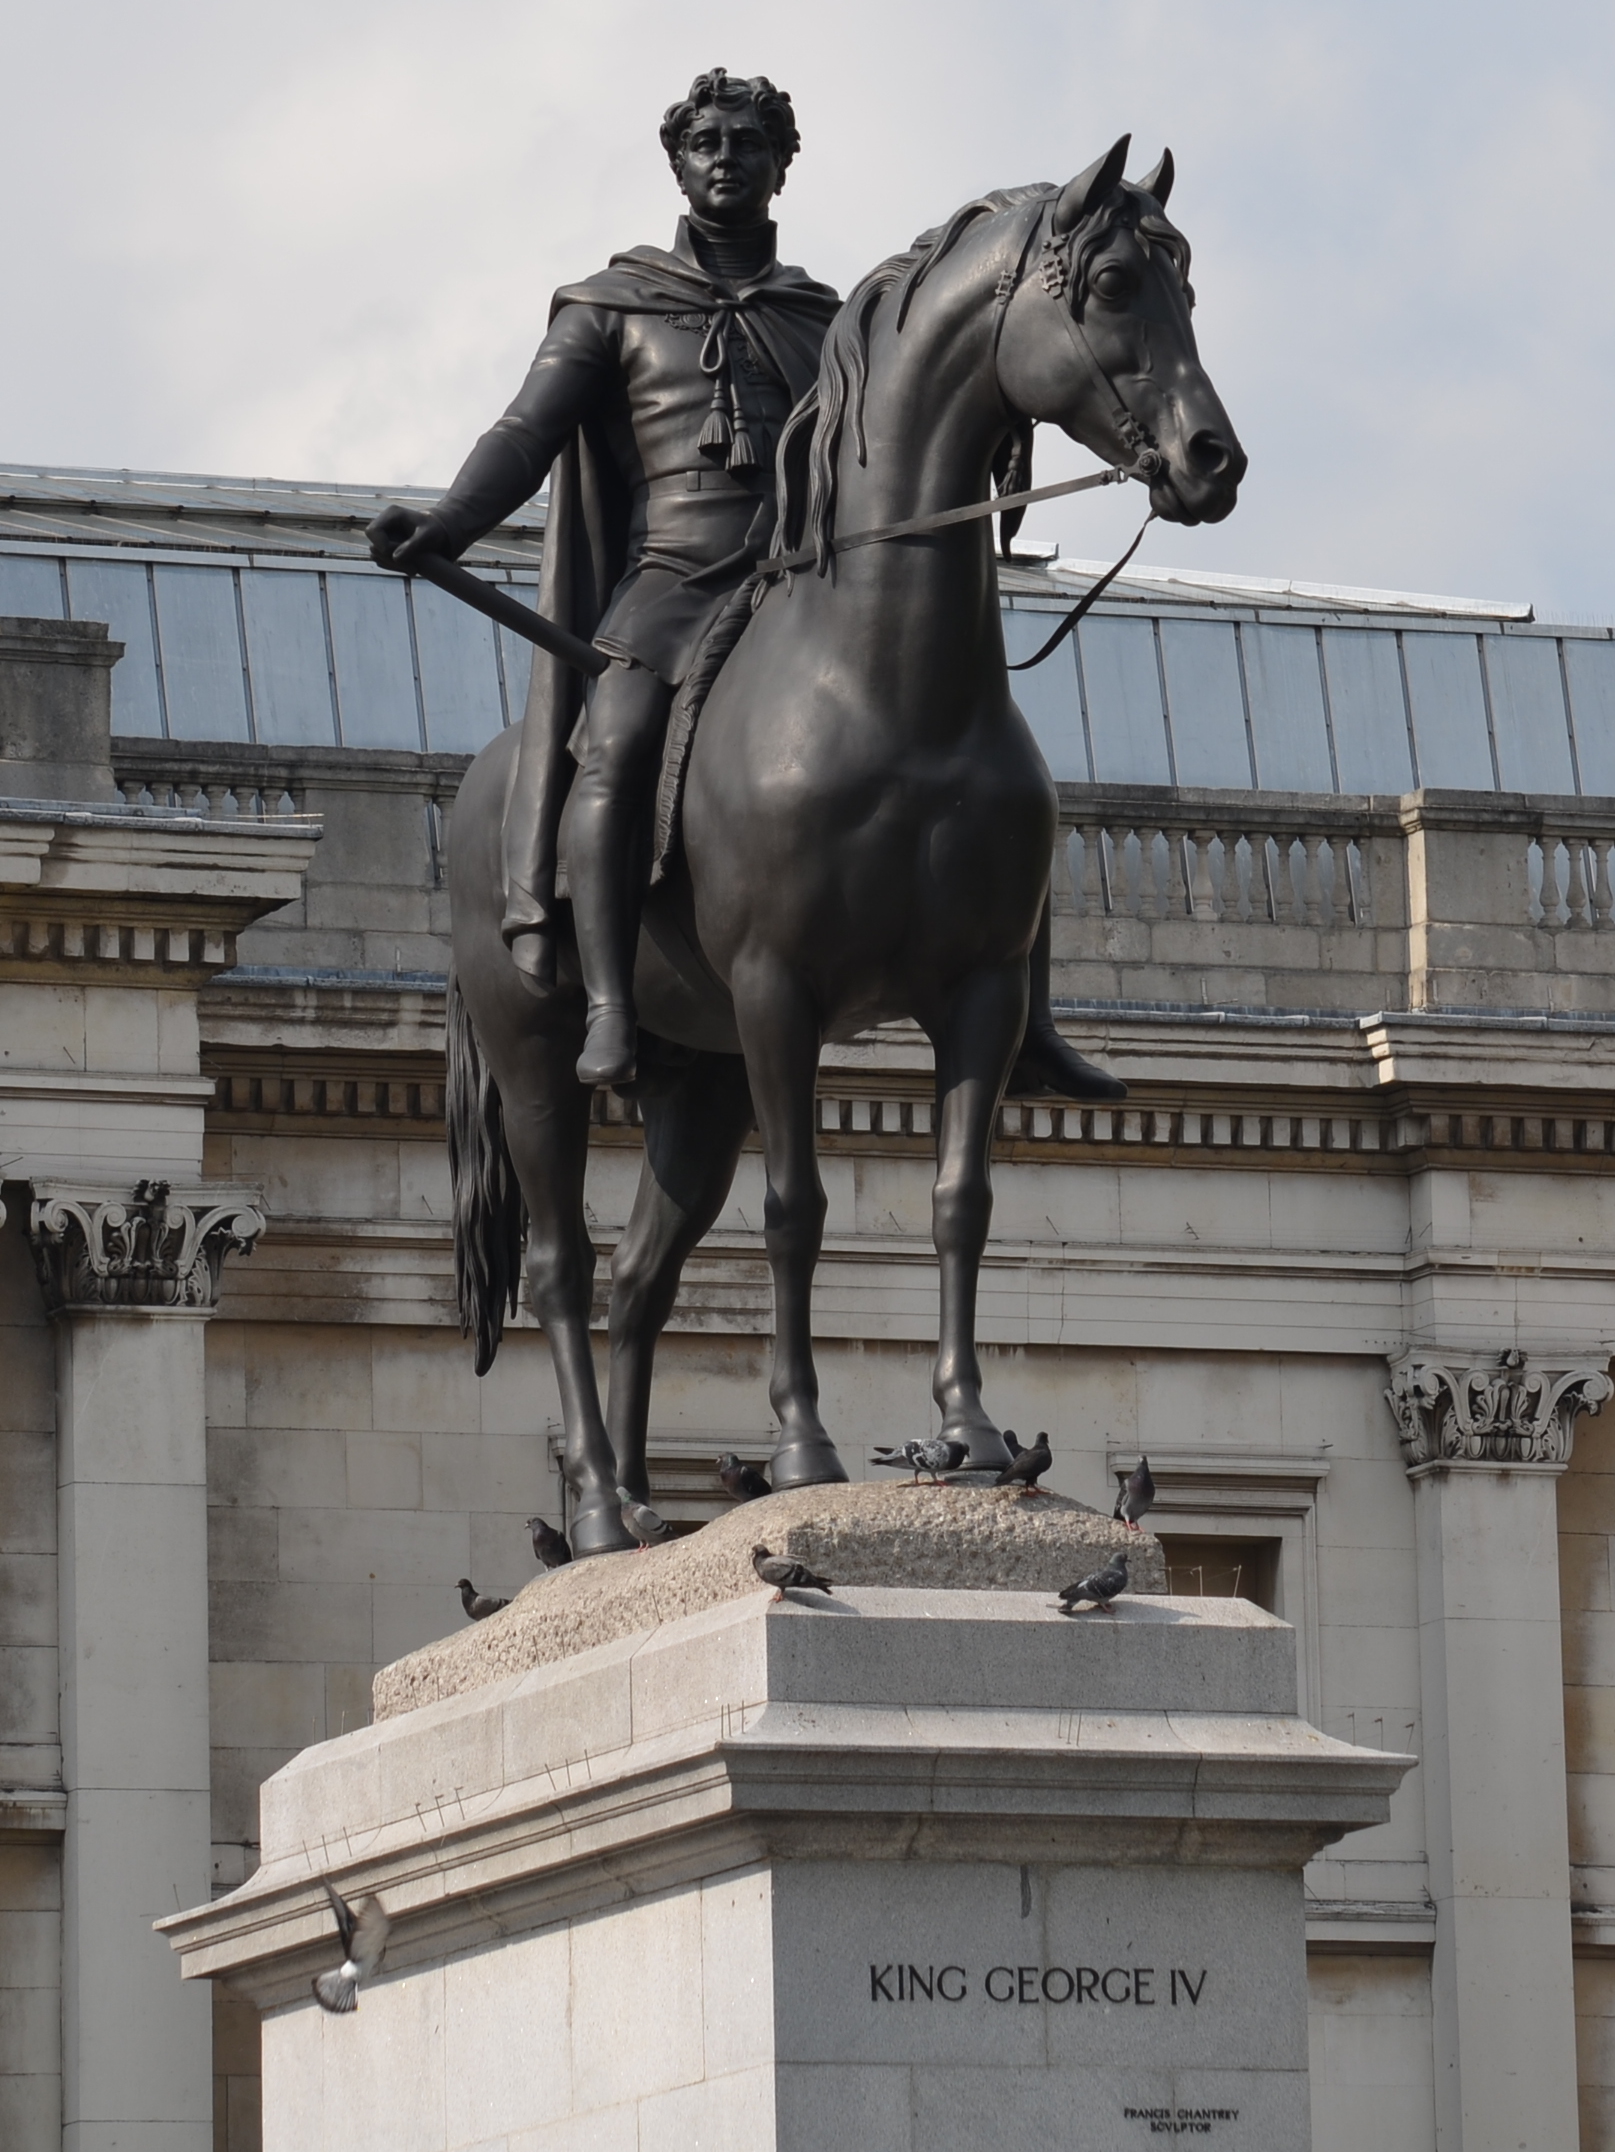 Ha Ha Hu Hu: A Horse-headed God in Trafalgar Square